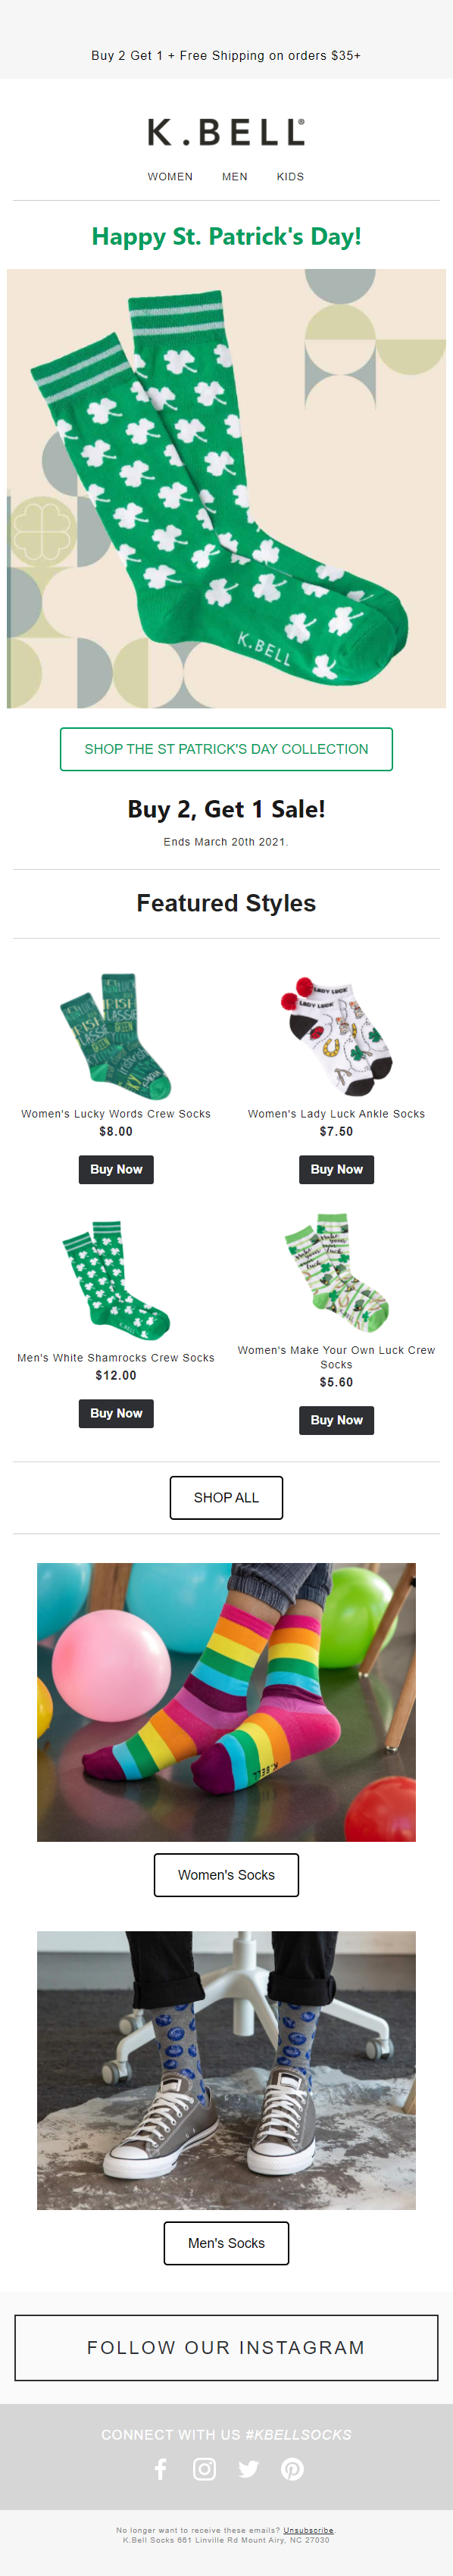  St. Patrick’s Day email- K. Bell Socks